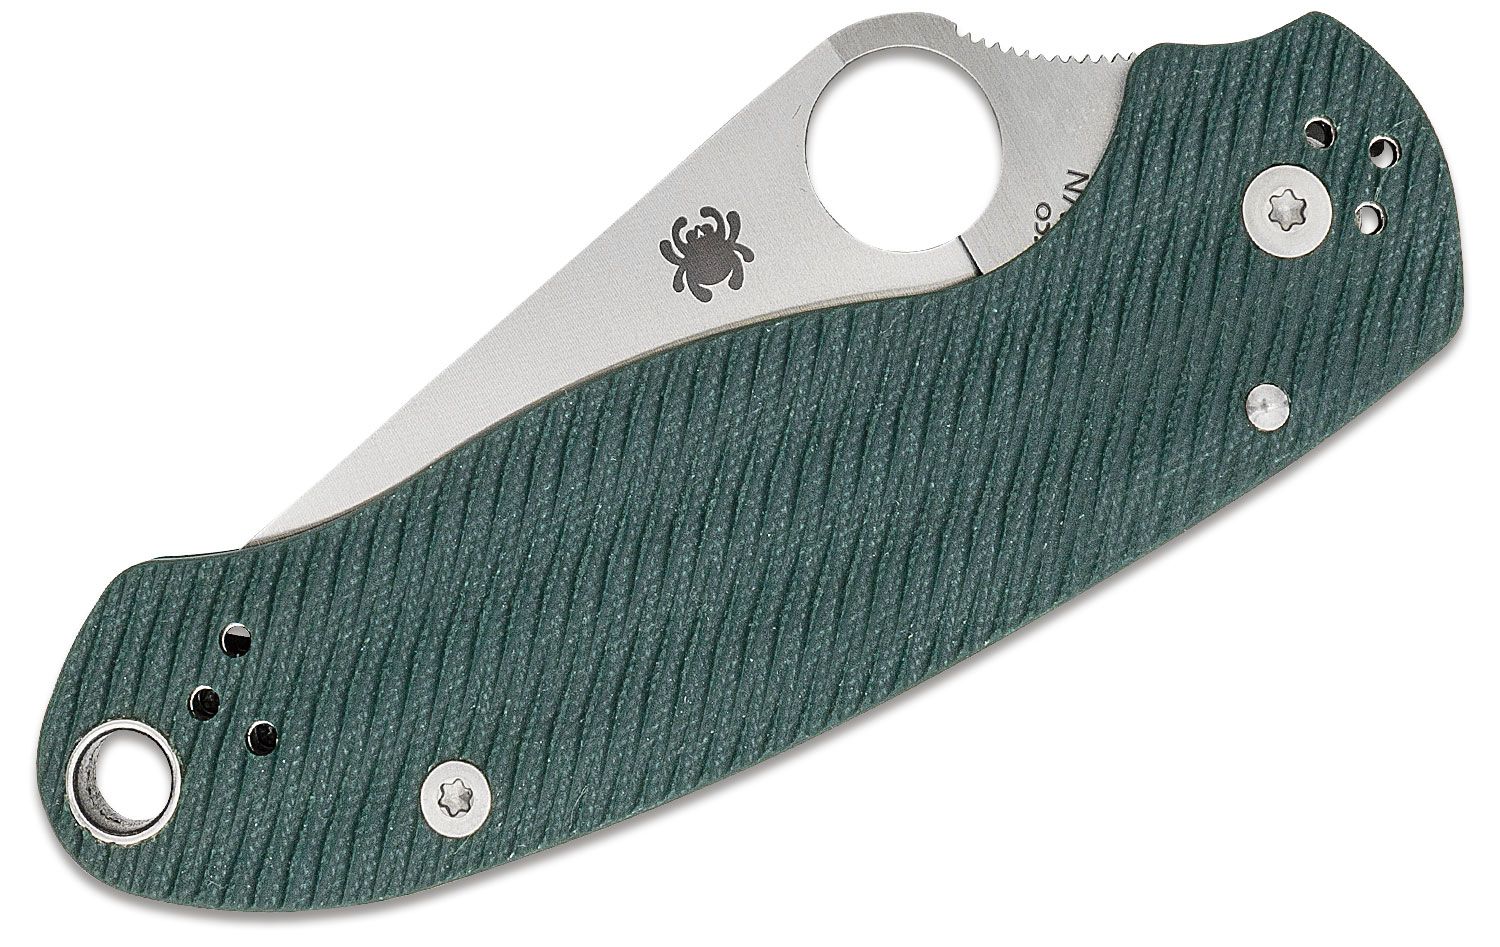 Spyderco | Para 3 (Sprint) Green G-10 Knife Handle - Plain Blade